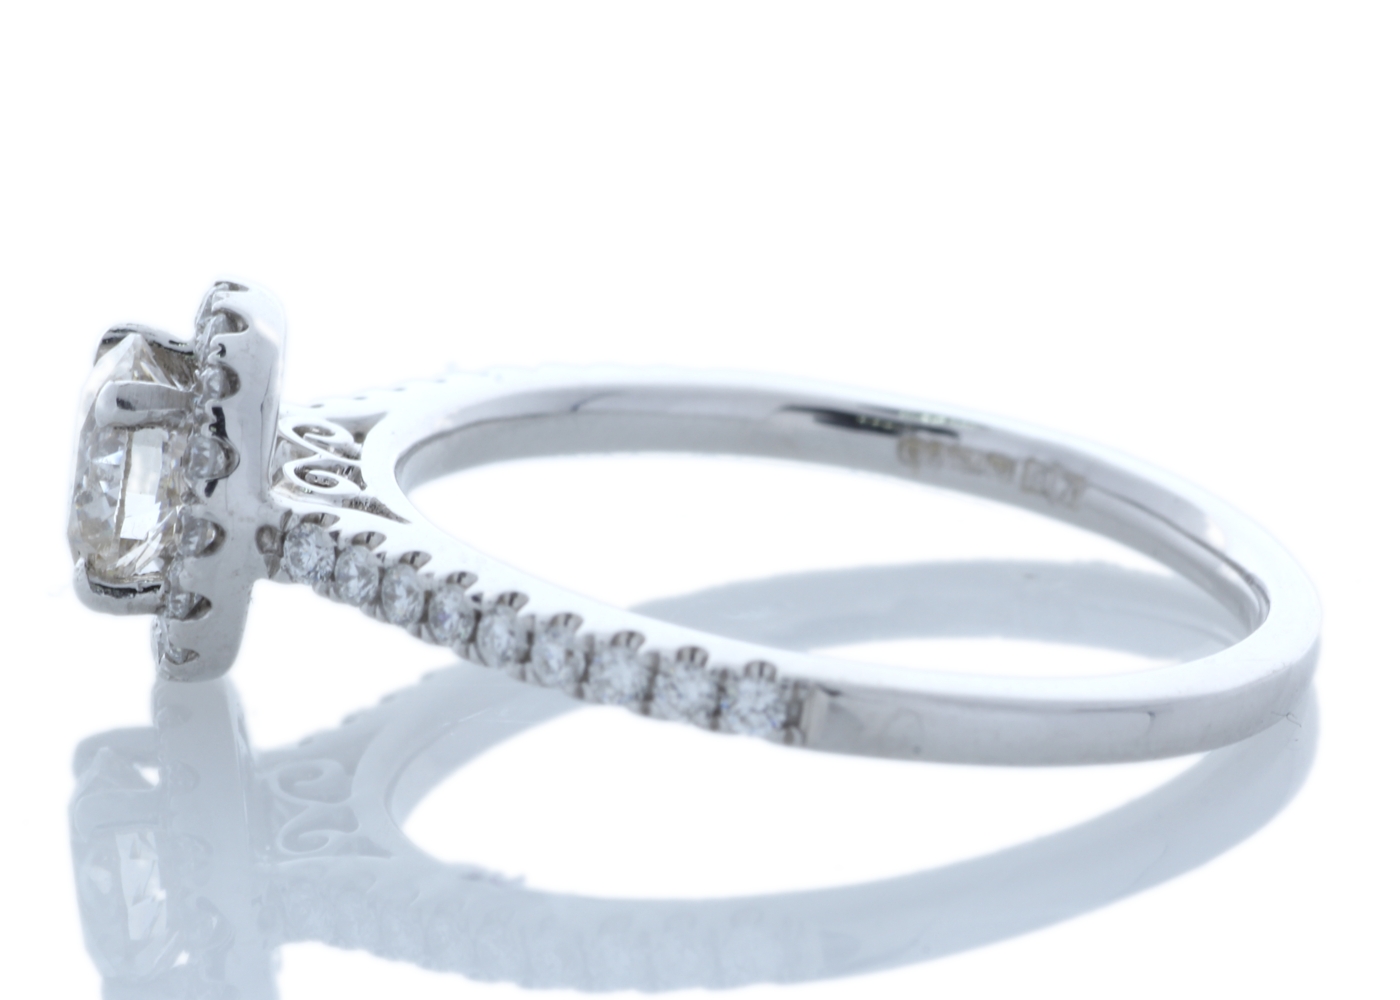 18ct White Gold Halo Set Diamond Ring 0.74 Carats - Image 2 of 4